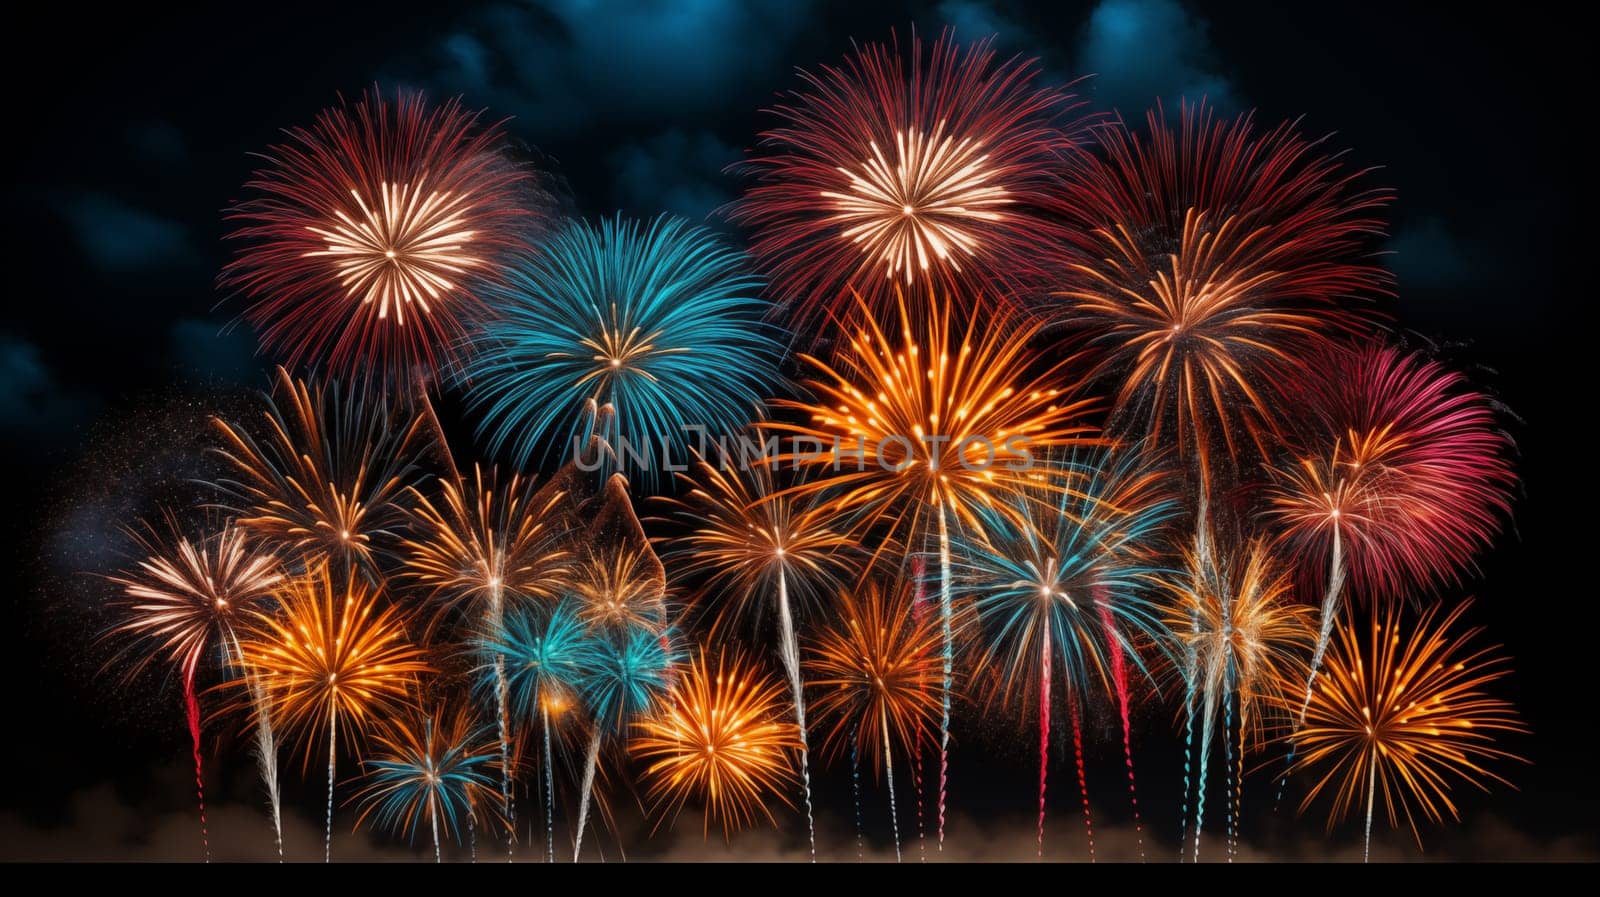 A stunning burst of multicolored fireworks light up the dark sky, by Zakharova